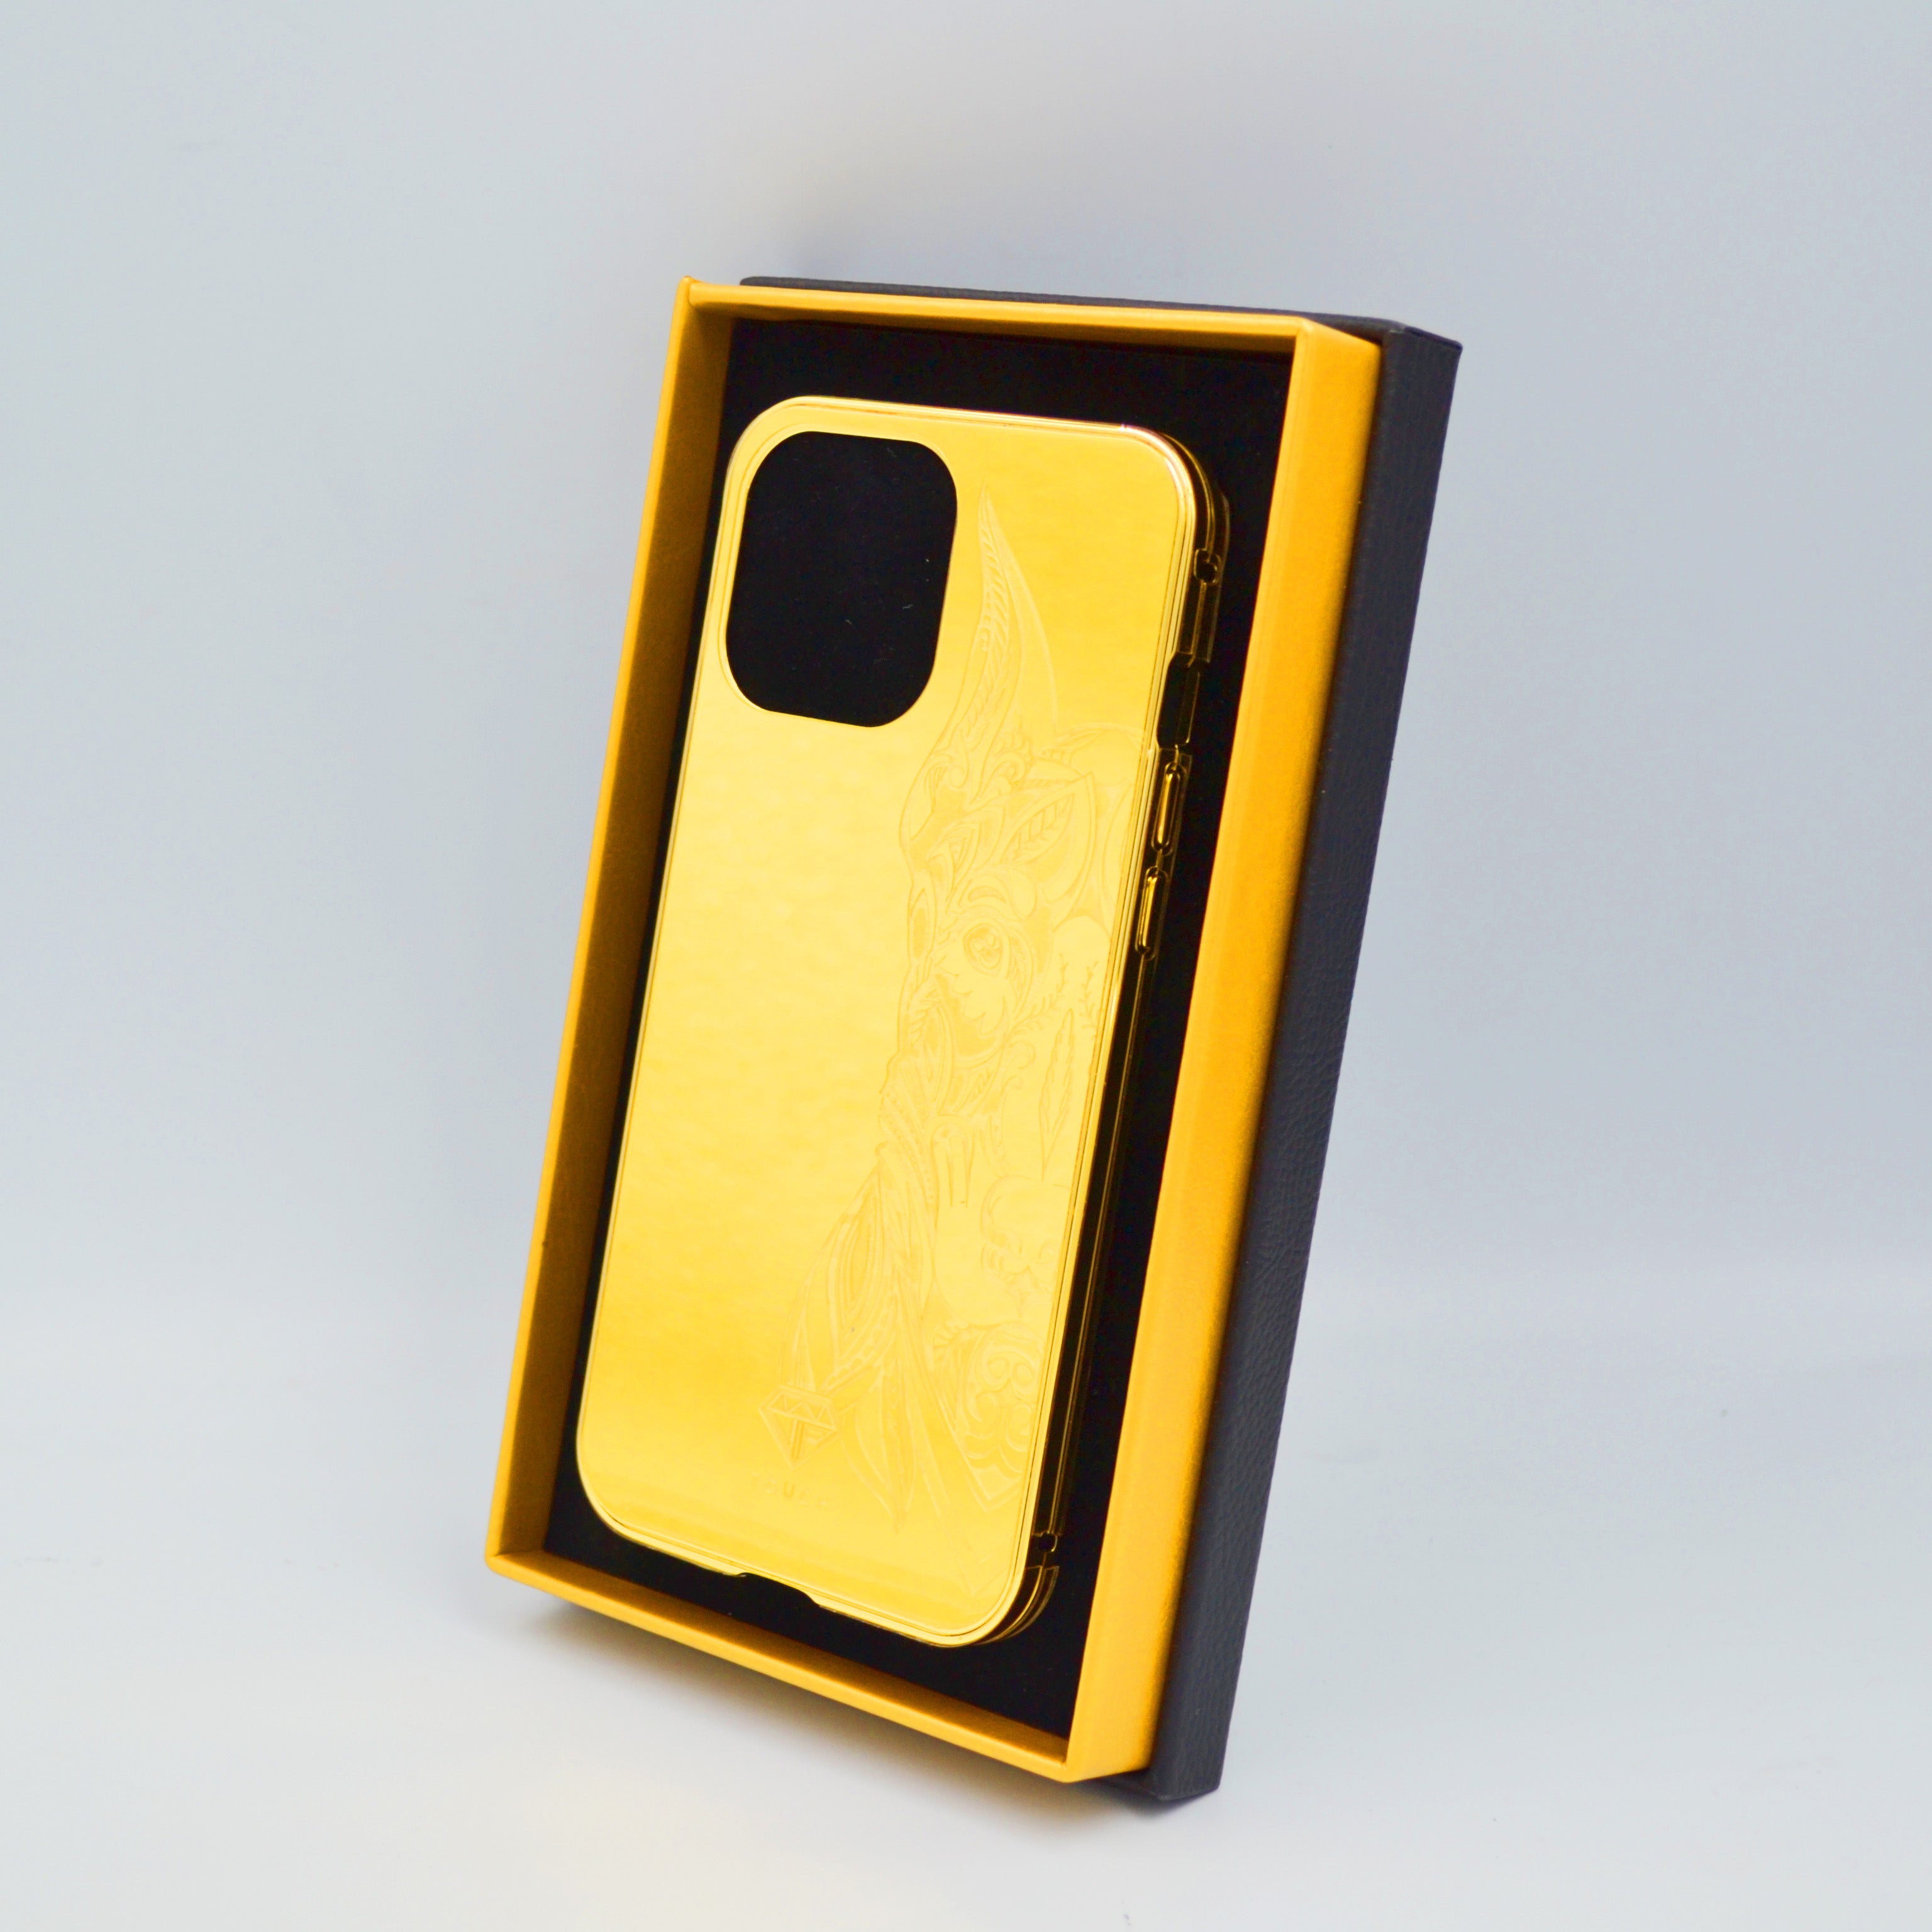 Vip Gold Hiphone Telecom iPhone 13 Pro Max 24K Dobermann Artistic Edition